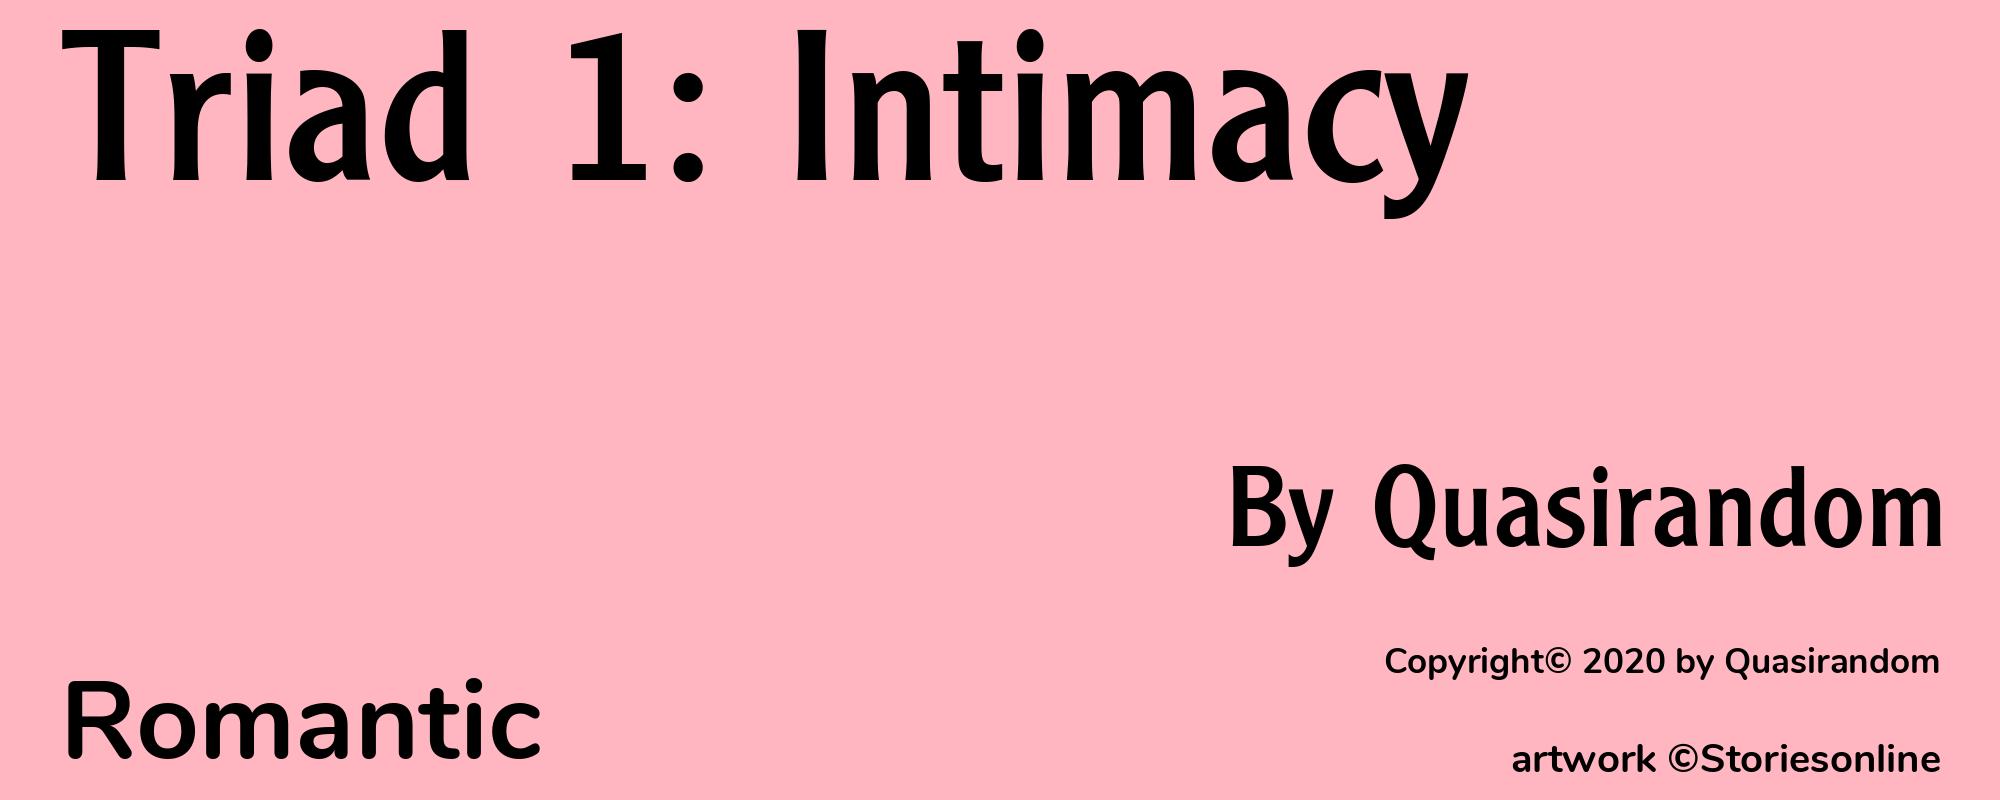 Triad 1: Intimacy - Cover